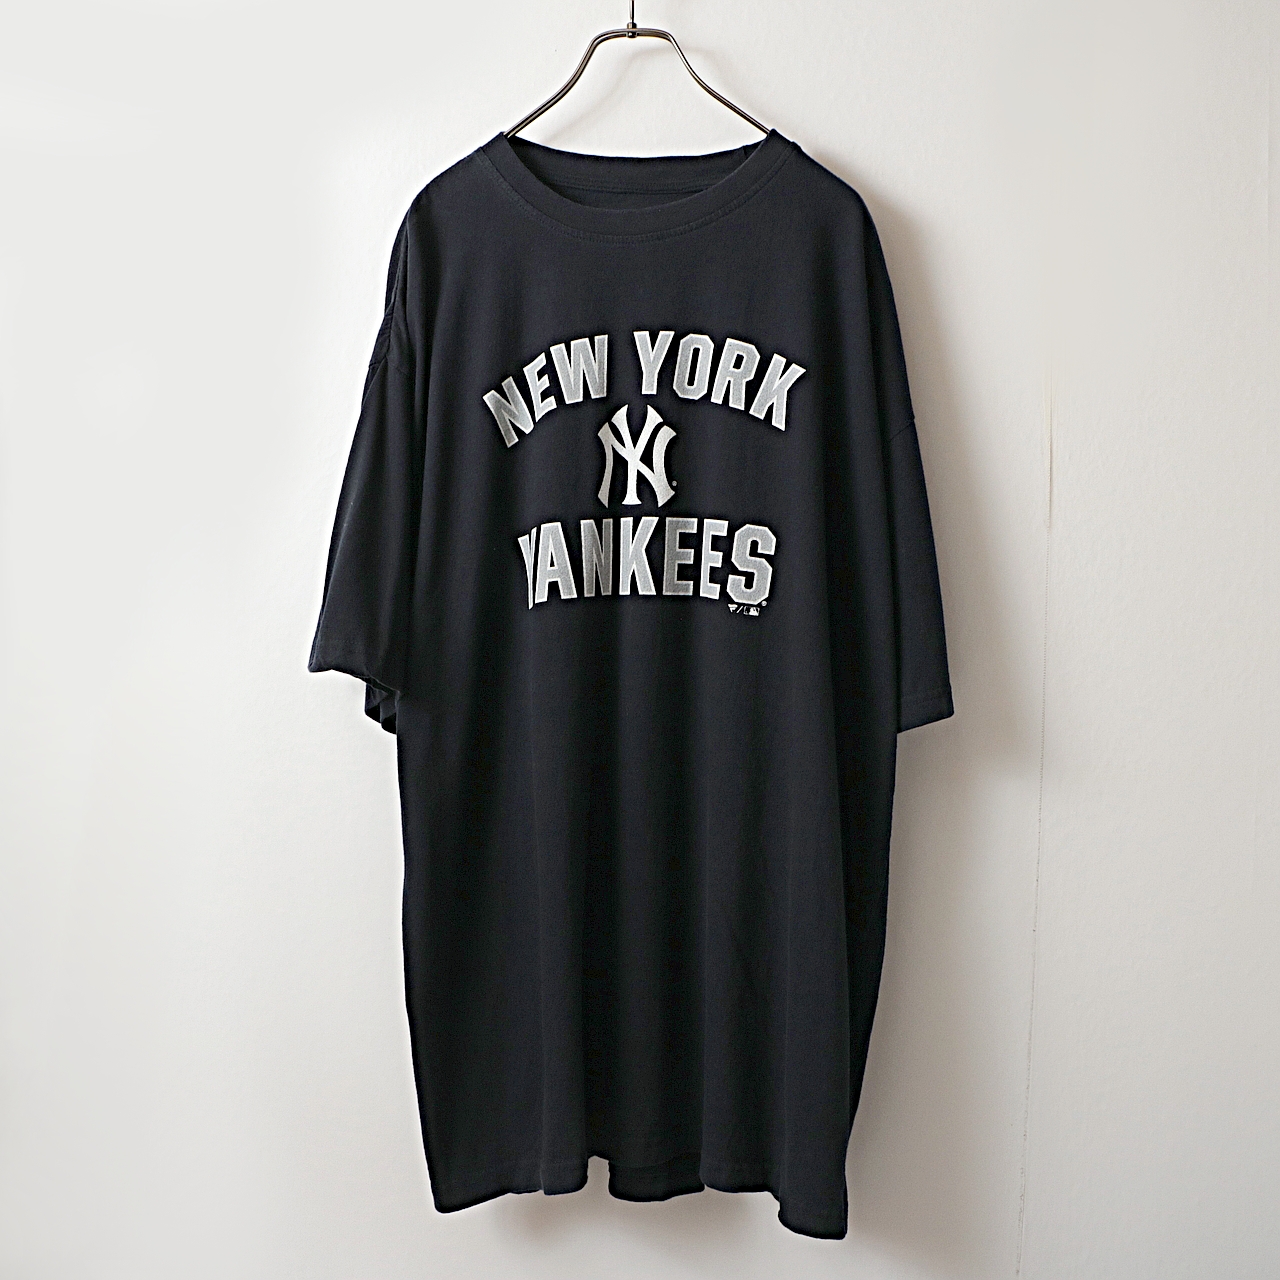 New York Yankees ヤンキース MLB プリント Tシャツ 古着 used – khaki 